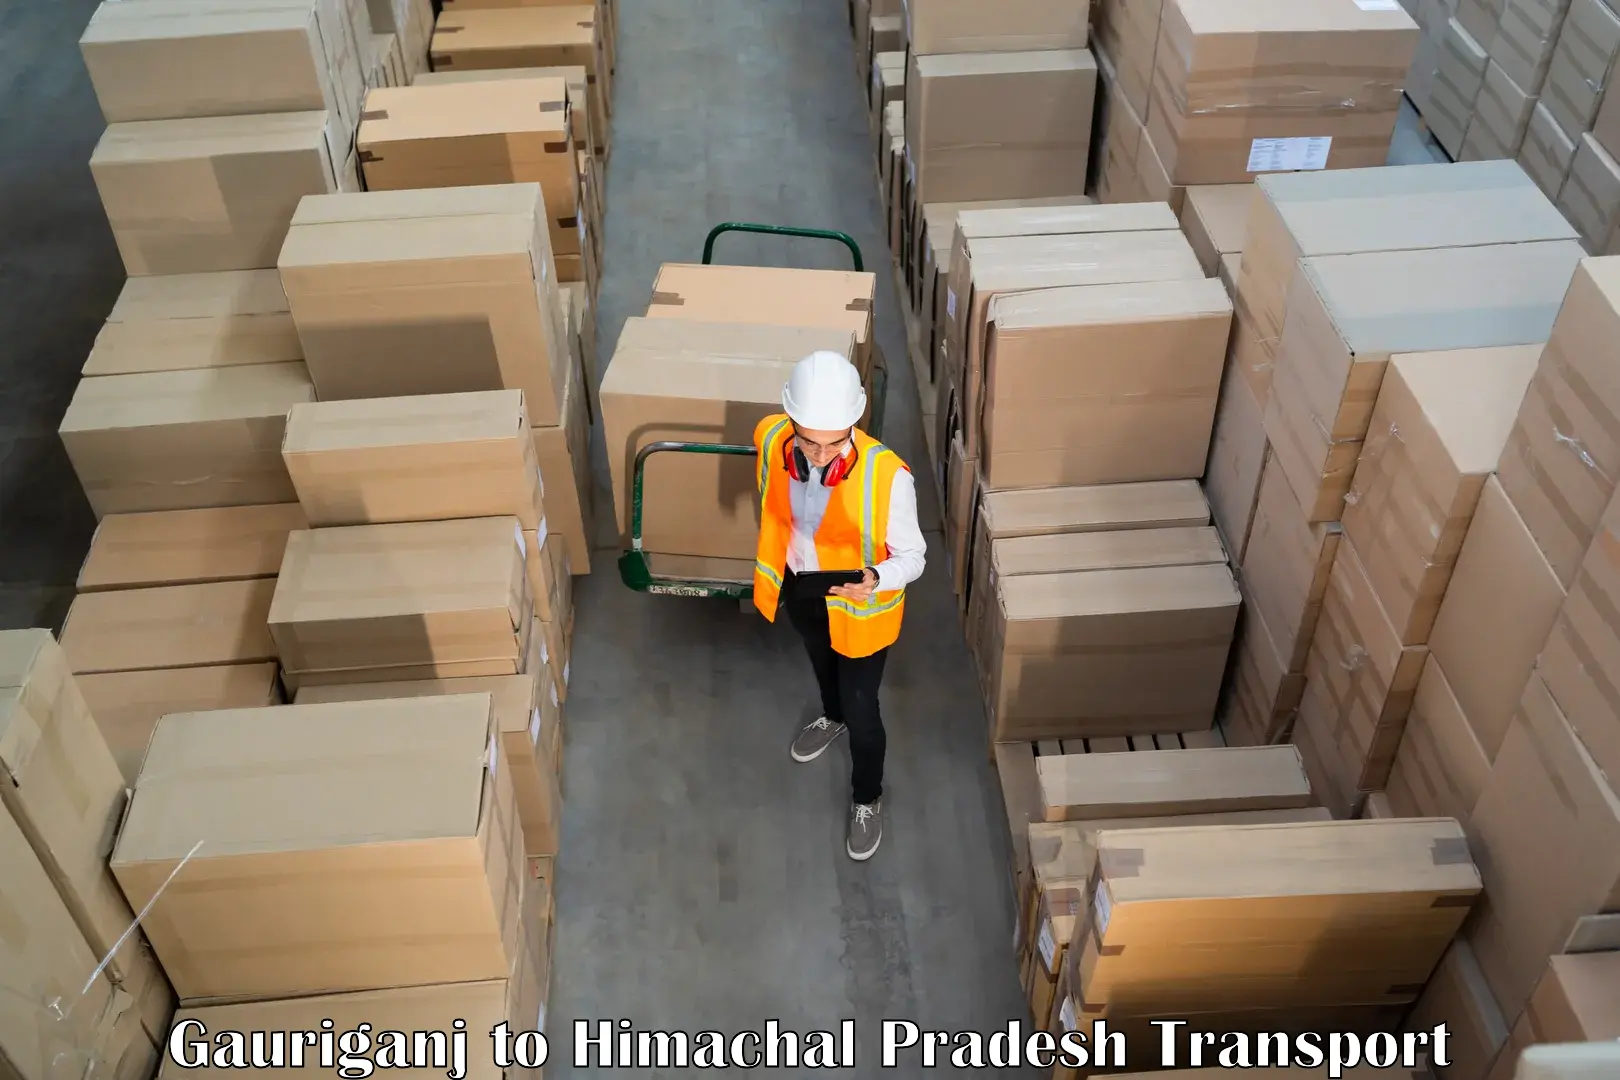 Truck transport companies in India Gauriganj to Indora